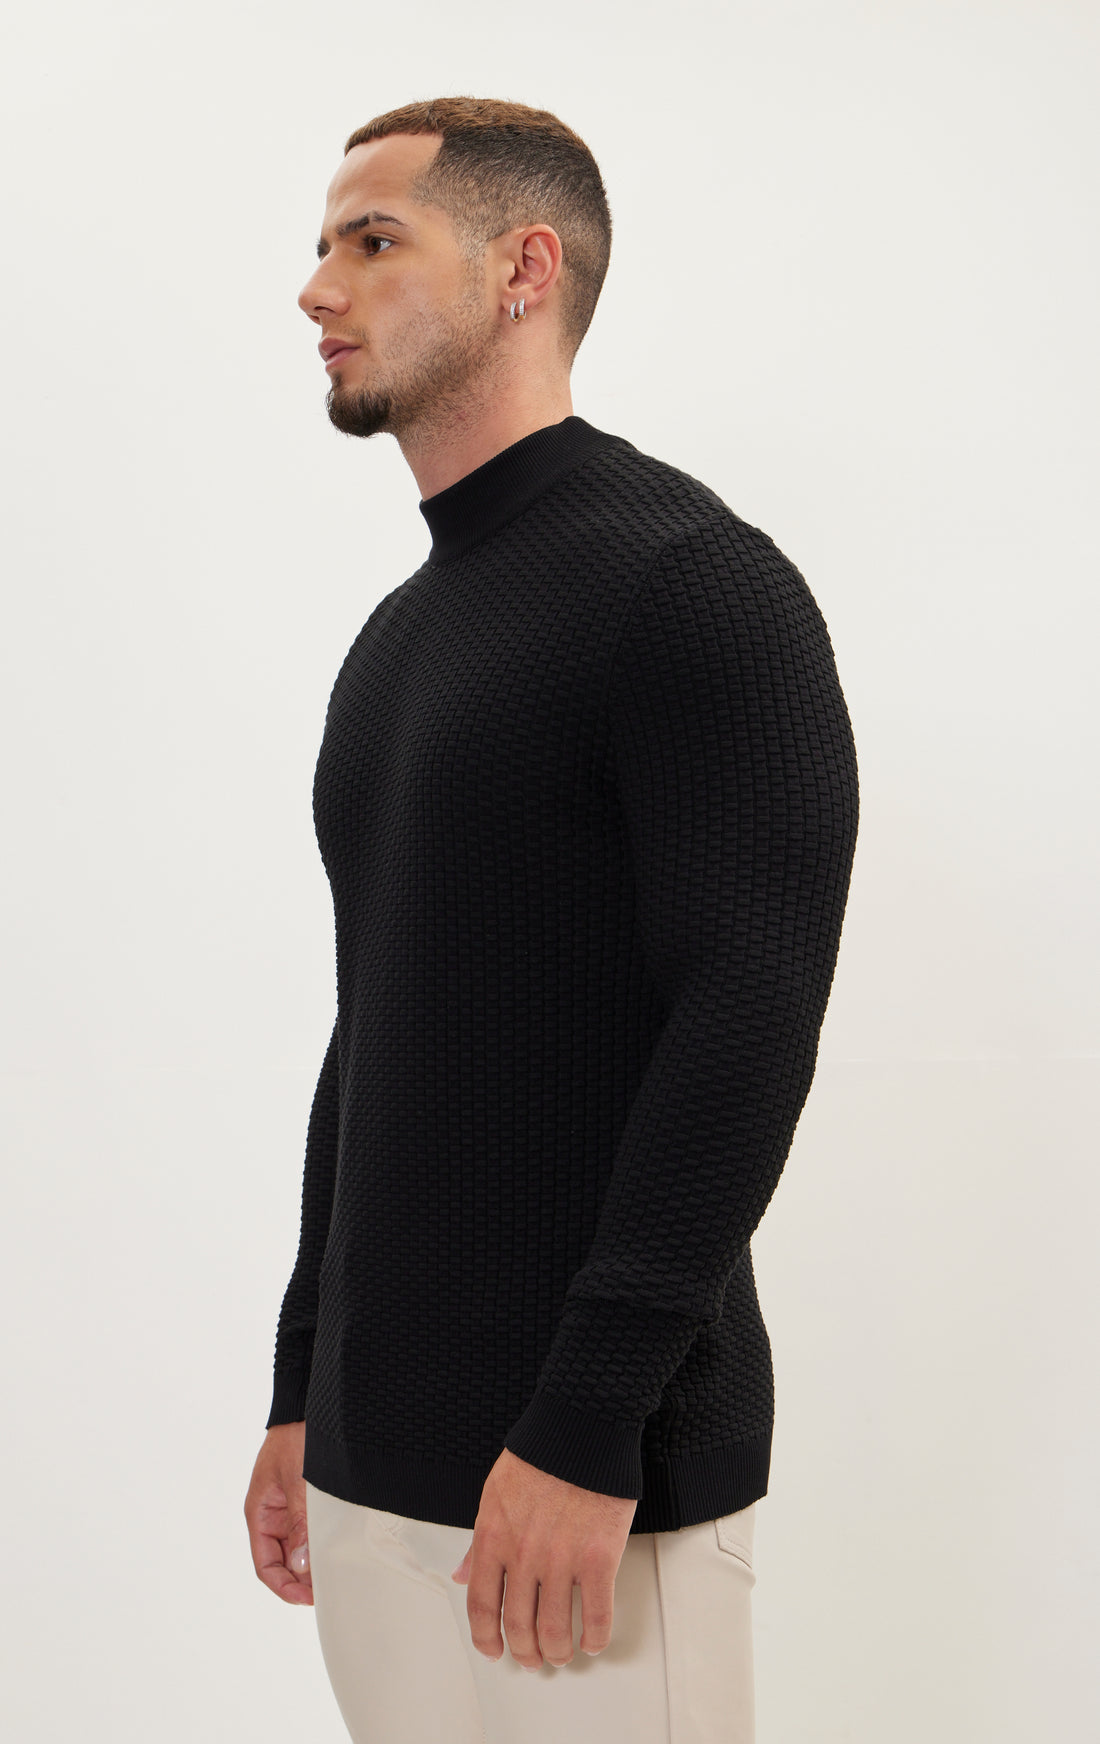 N° 6461 bamboo ribbing stitch mock neck sweater - Black